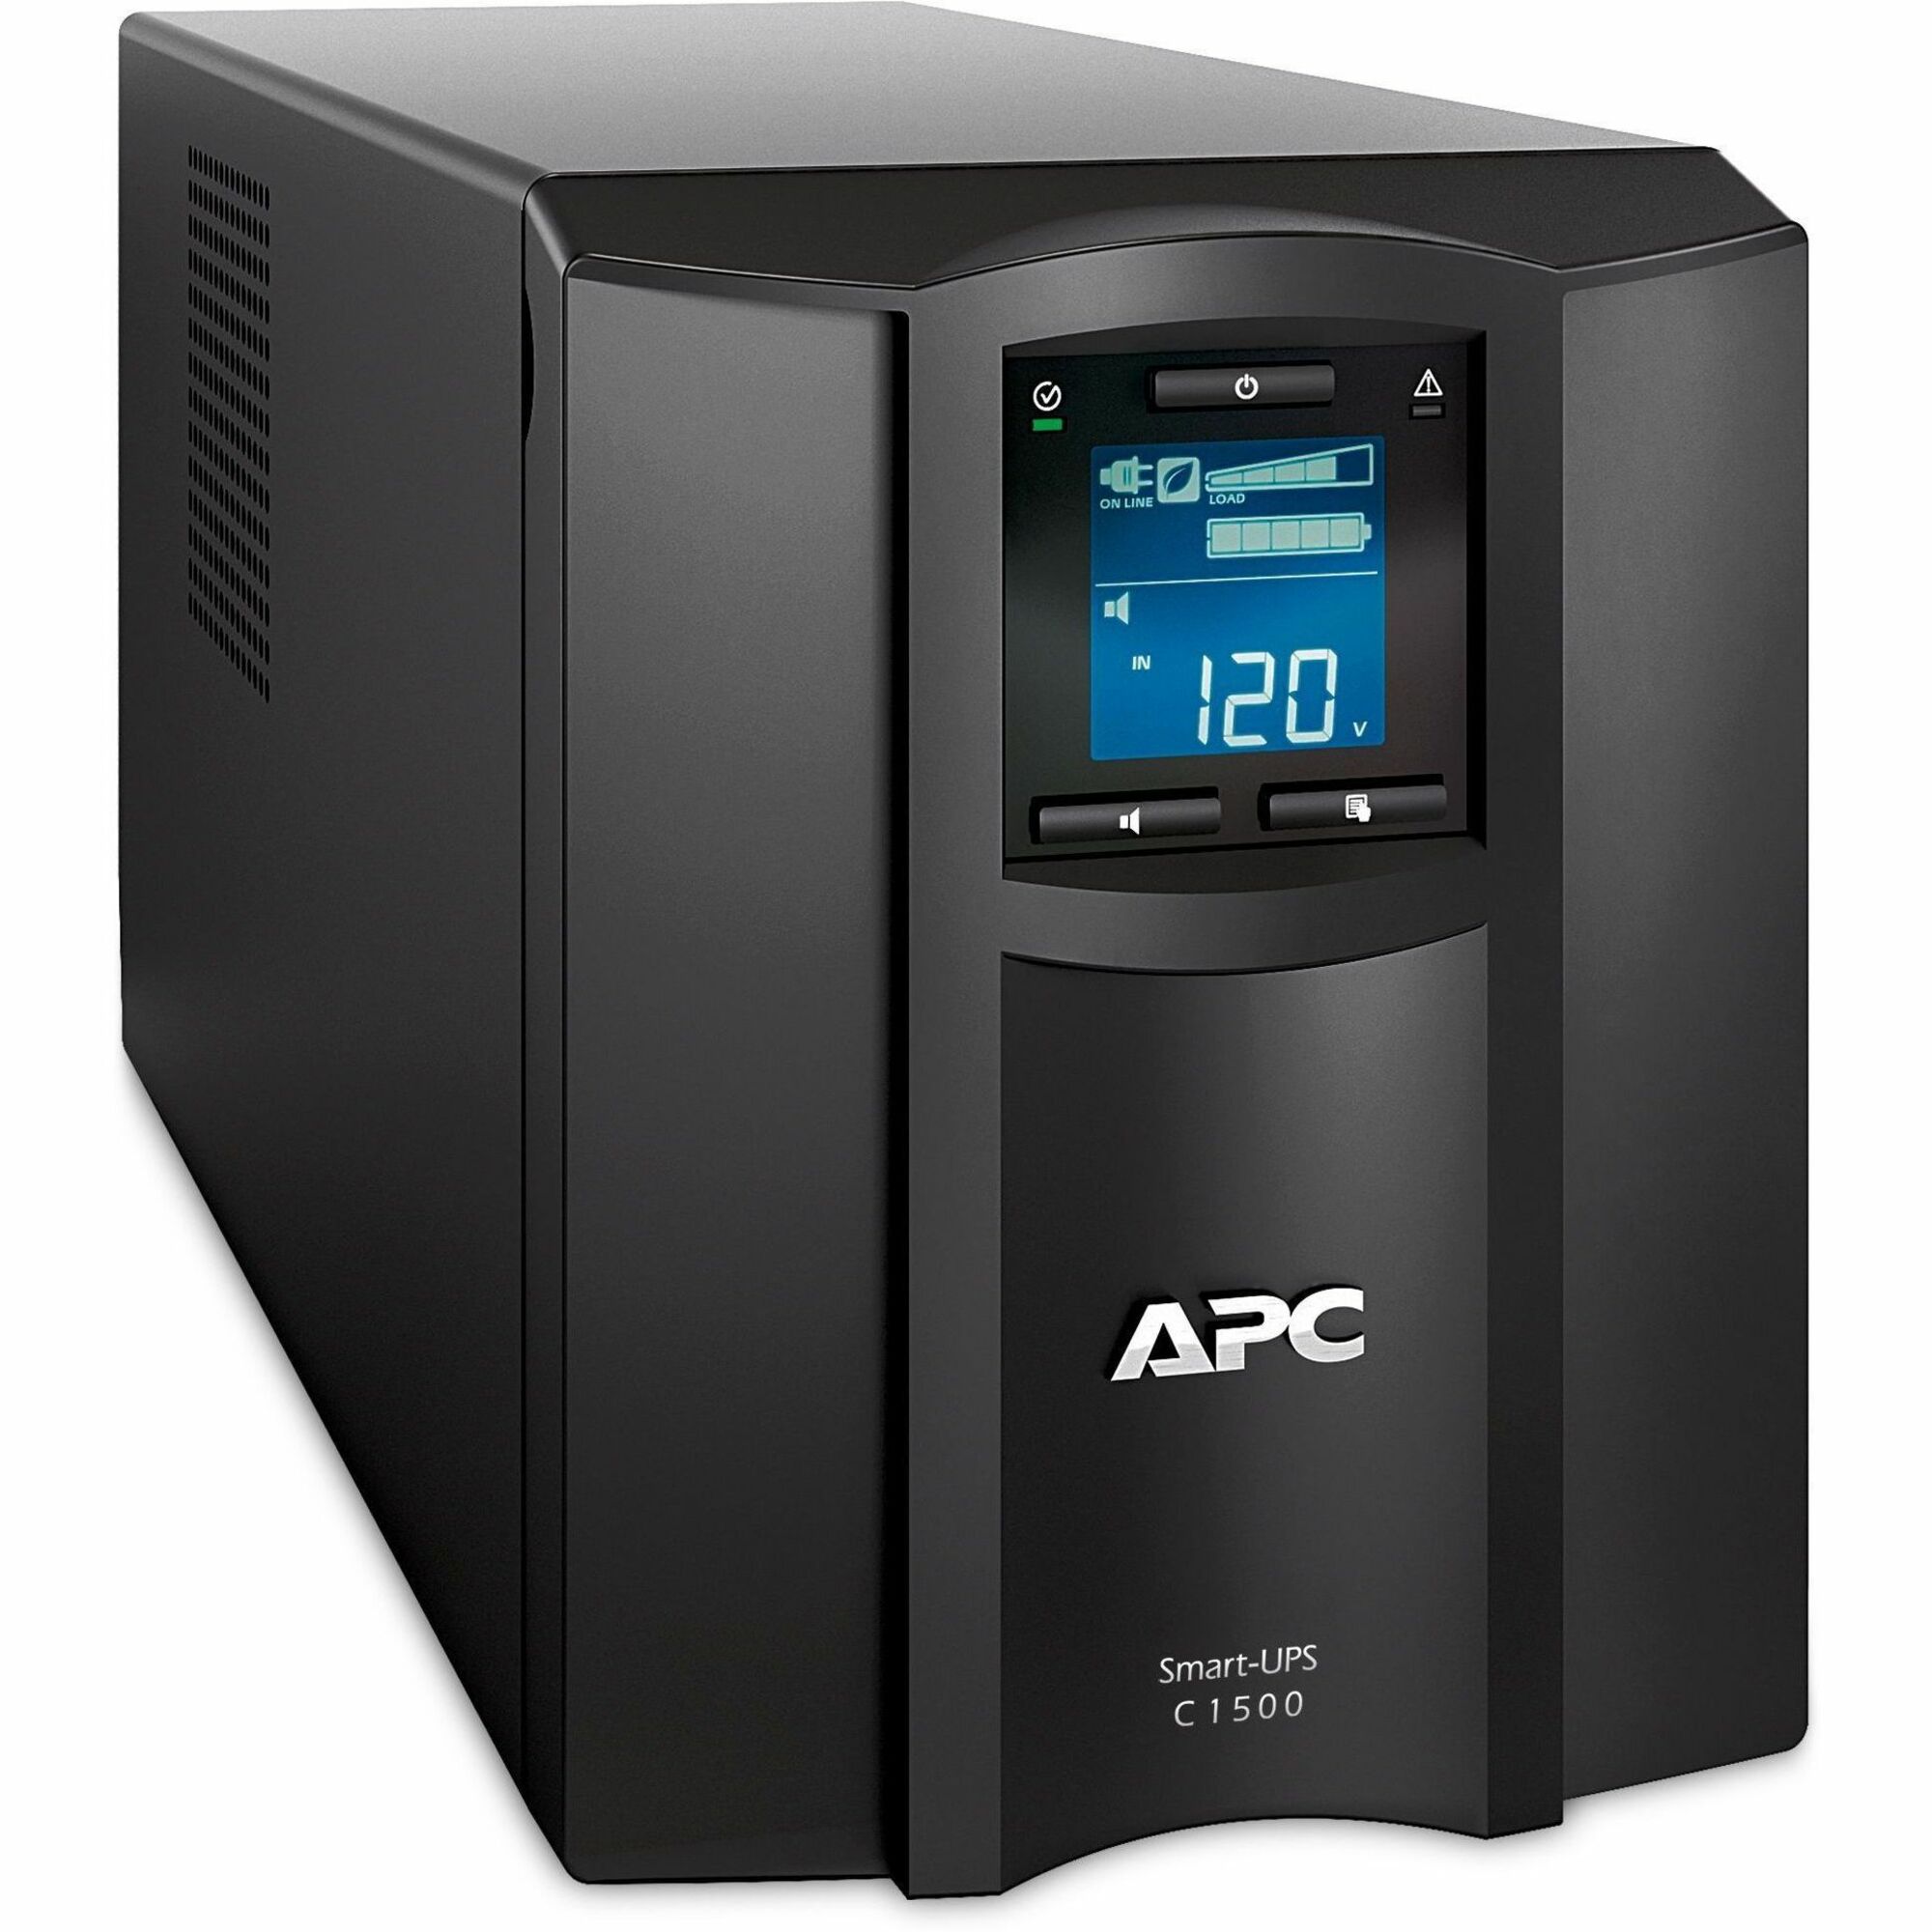 APC by Schneider Electric Smart-UPS SMC1500C 1500VA Desktop UPS